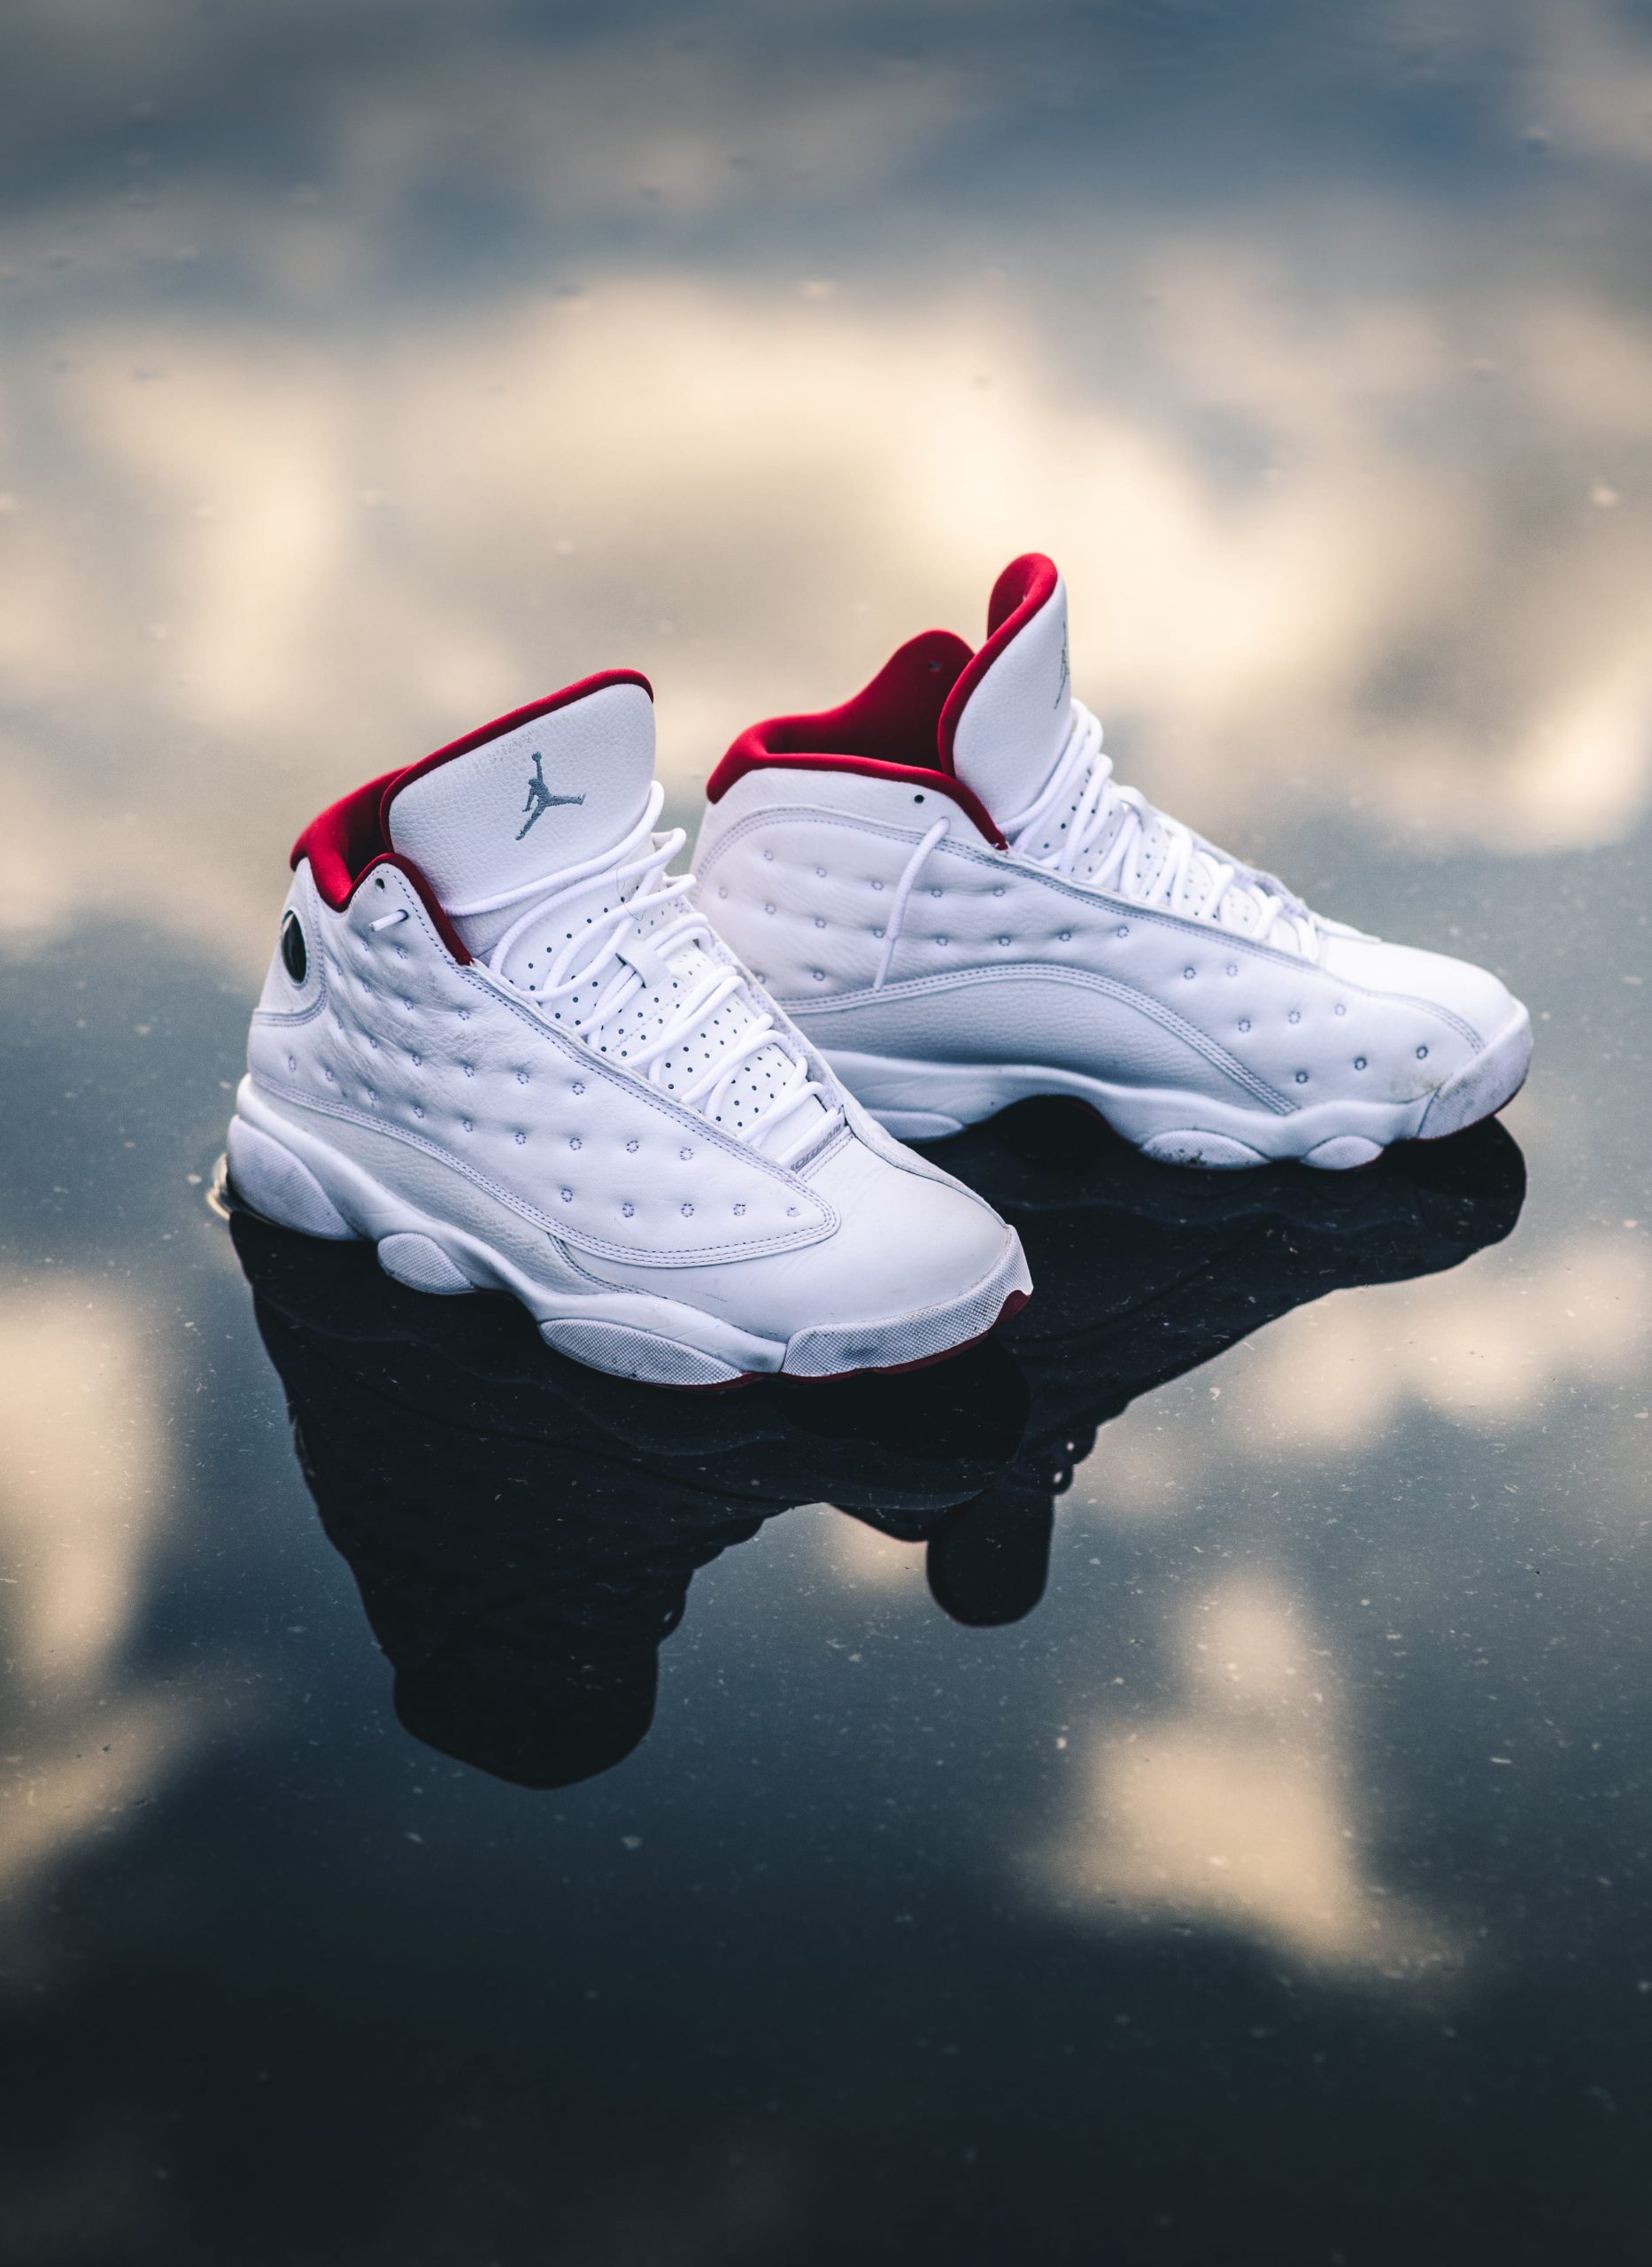 Wallpaper White And Red Air Jordan 13's, Shoe, Street, Basketball, Sneaker